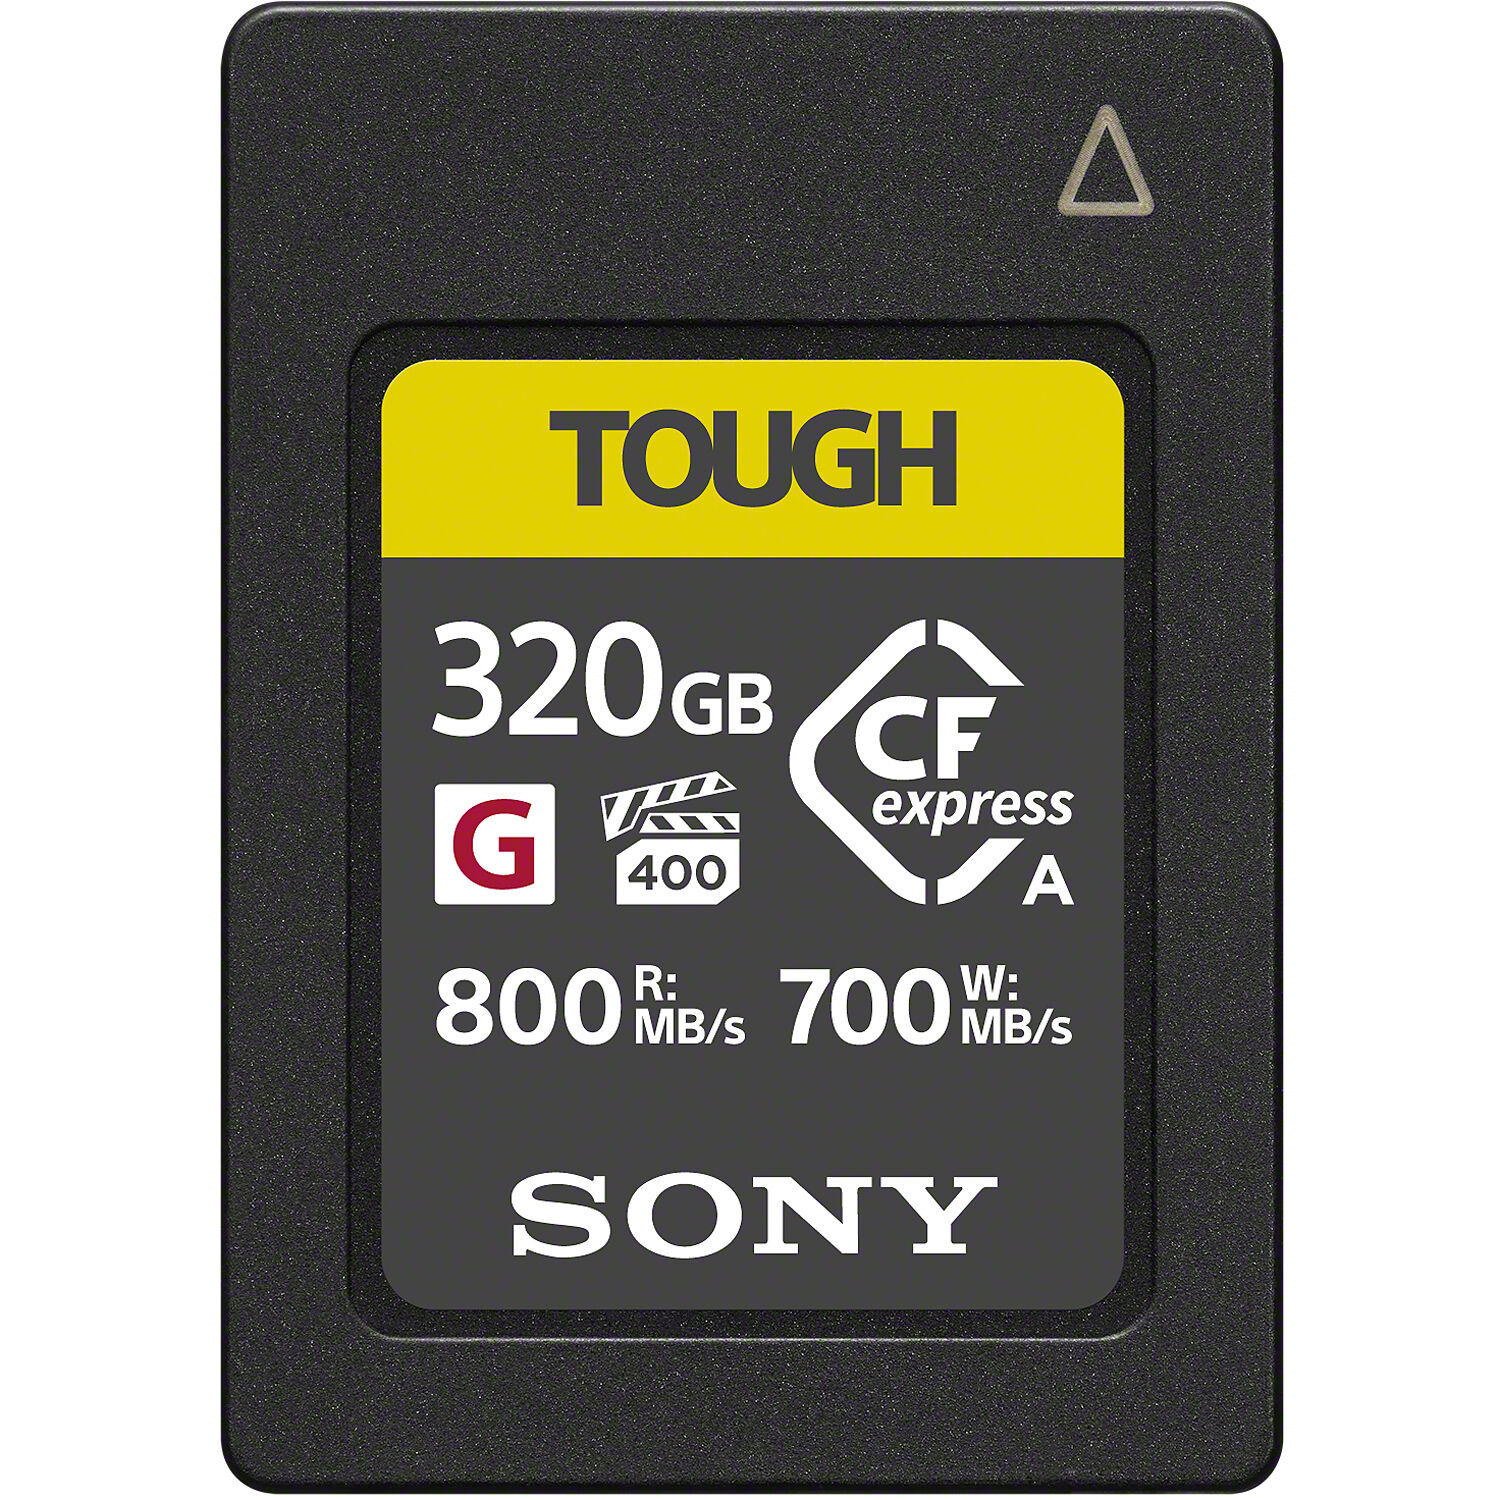 Sony CEA-G 系列 CFexpress Type A Tough 記憶卡 (320GB) CFExpress (A) 卡